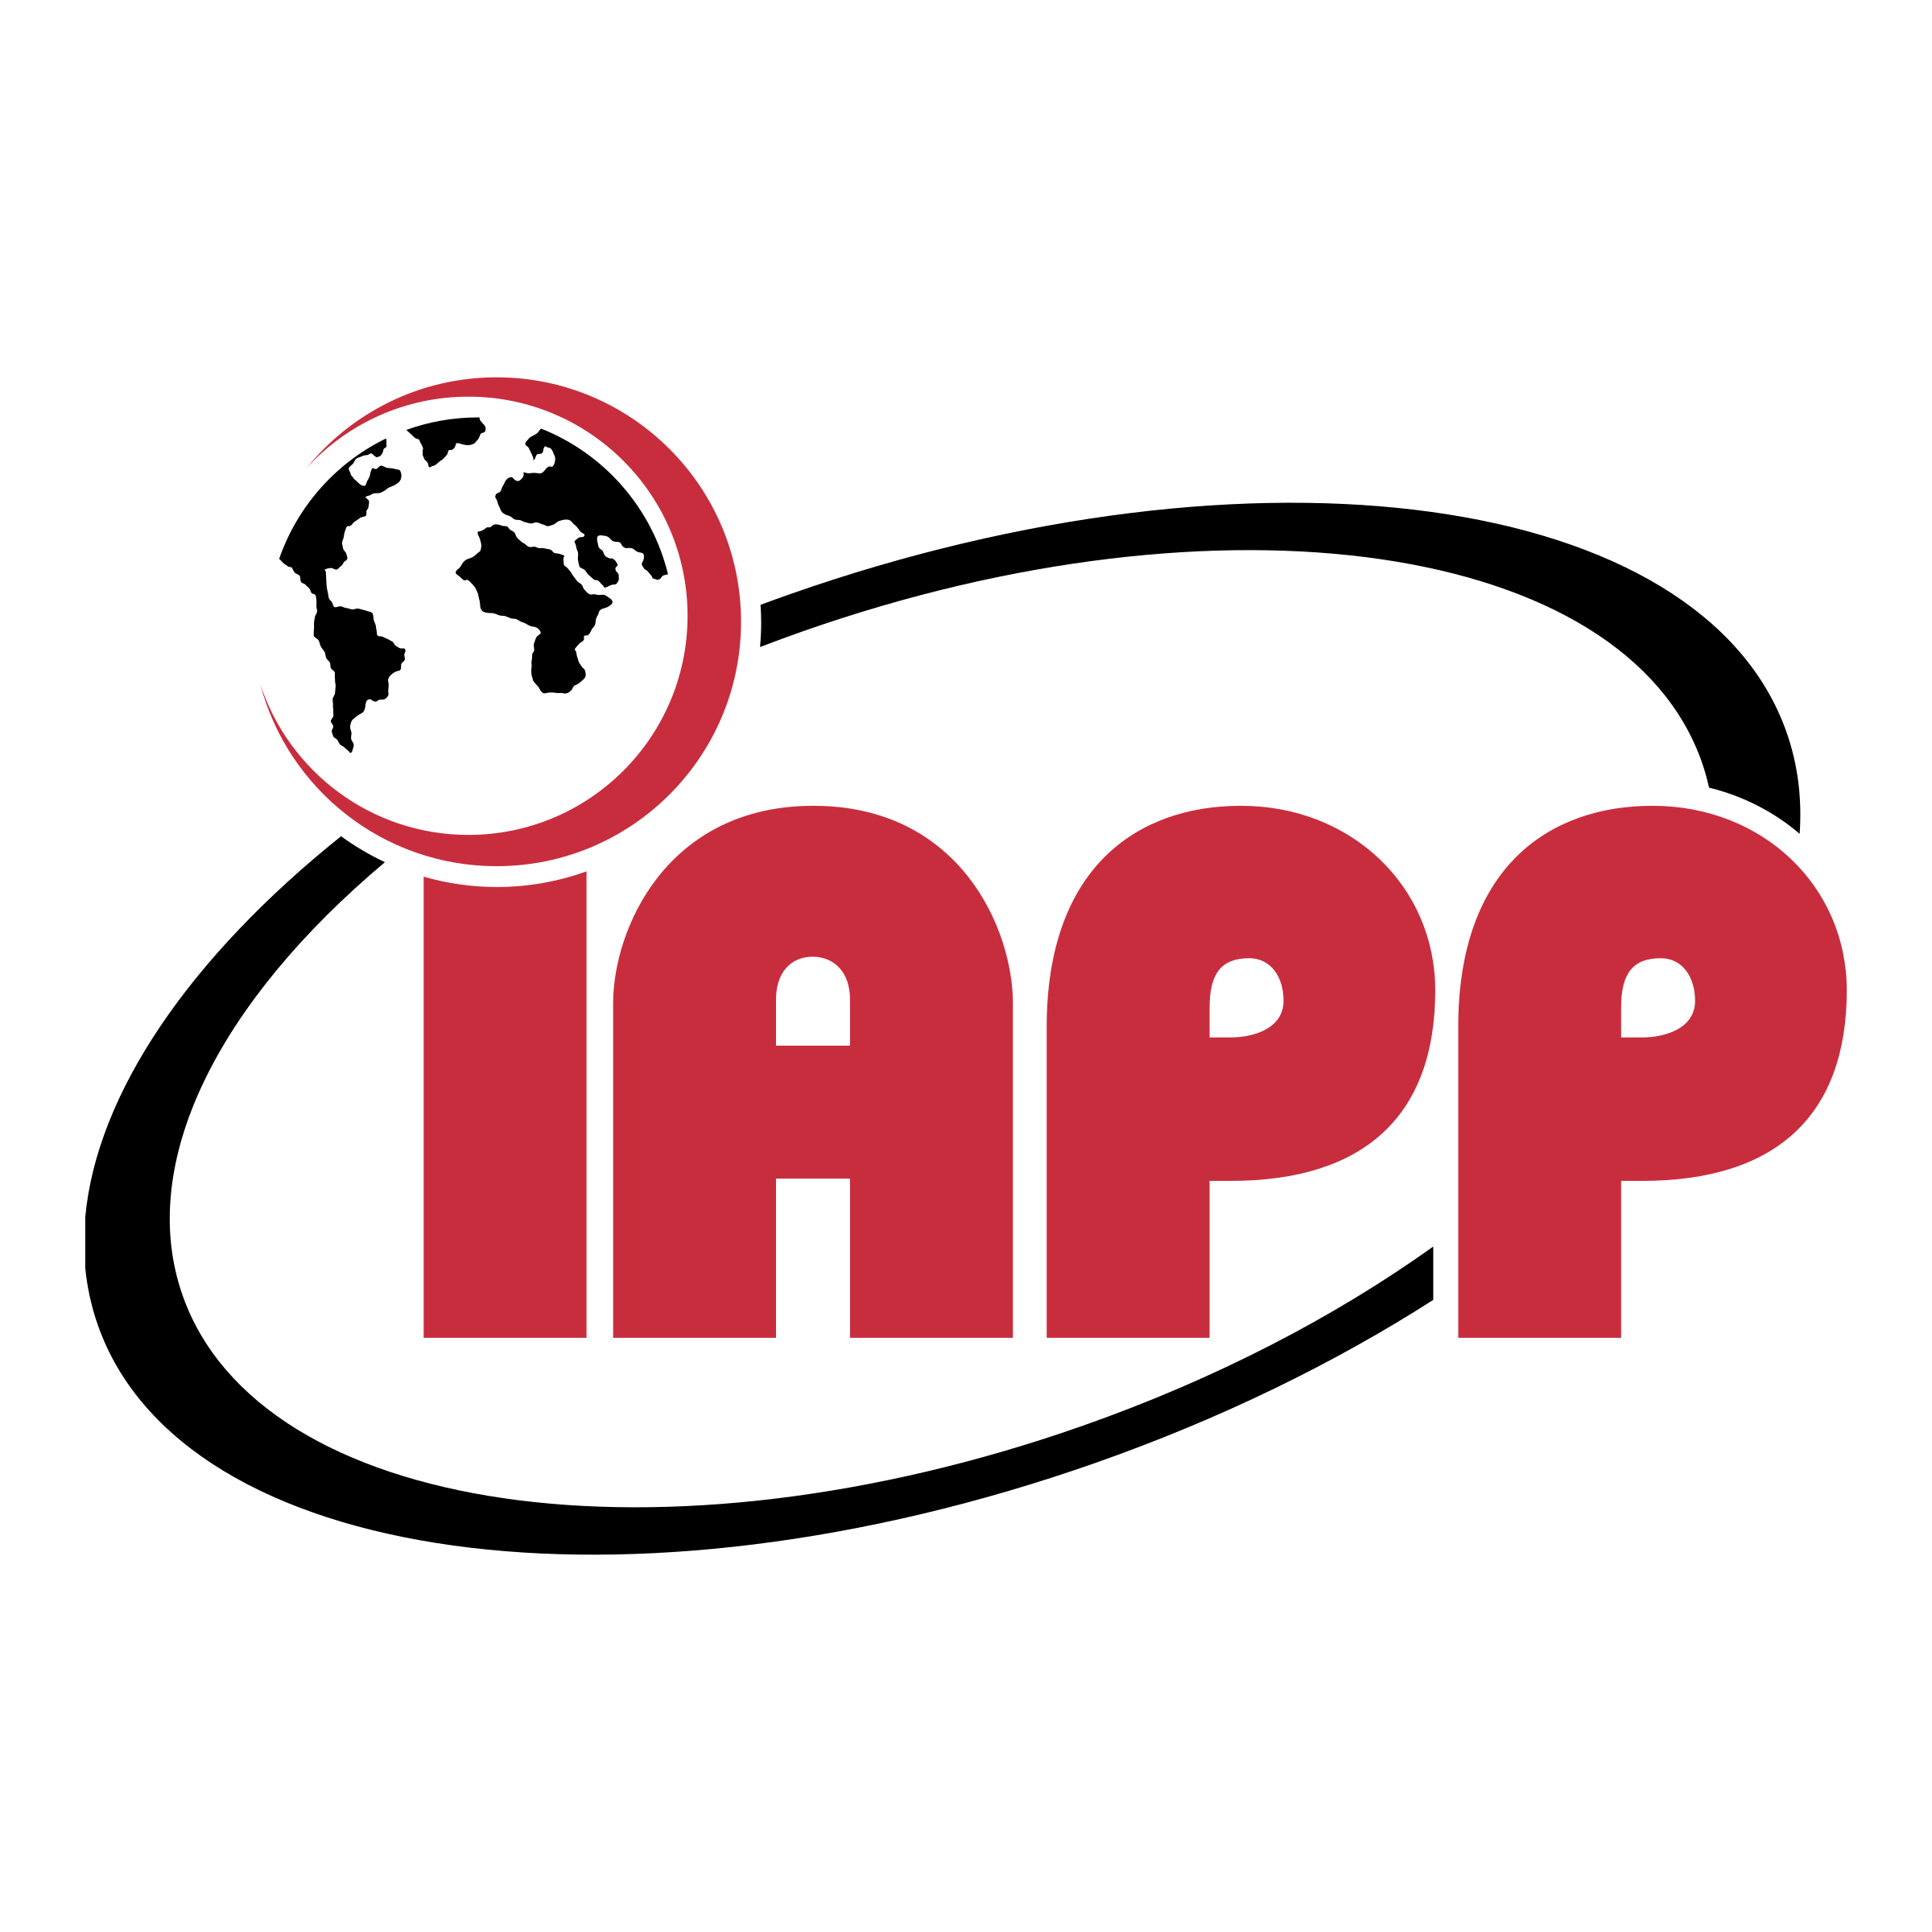 Iapp Logo - IAPP Logo PNG Transparent & SVG Vector - Freebie Supply